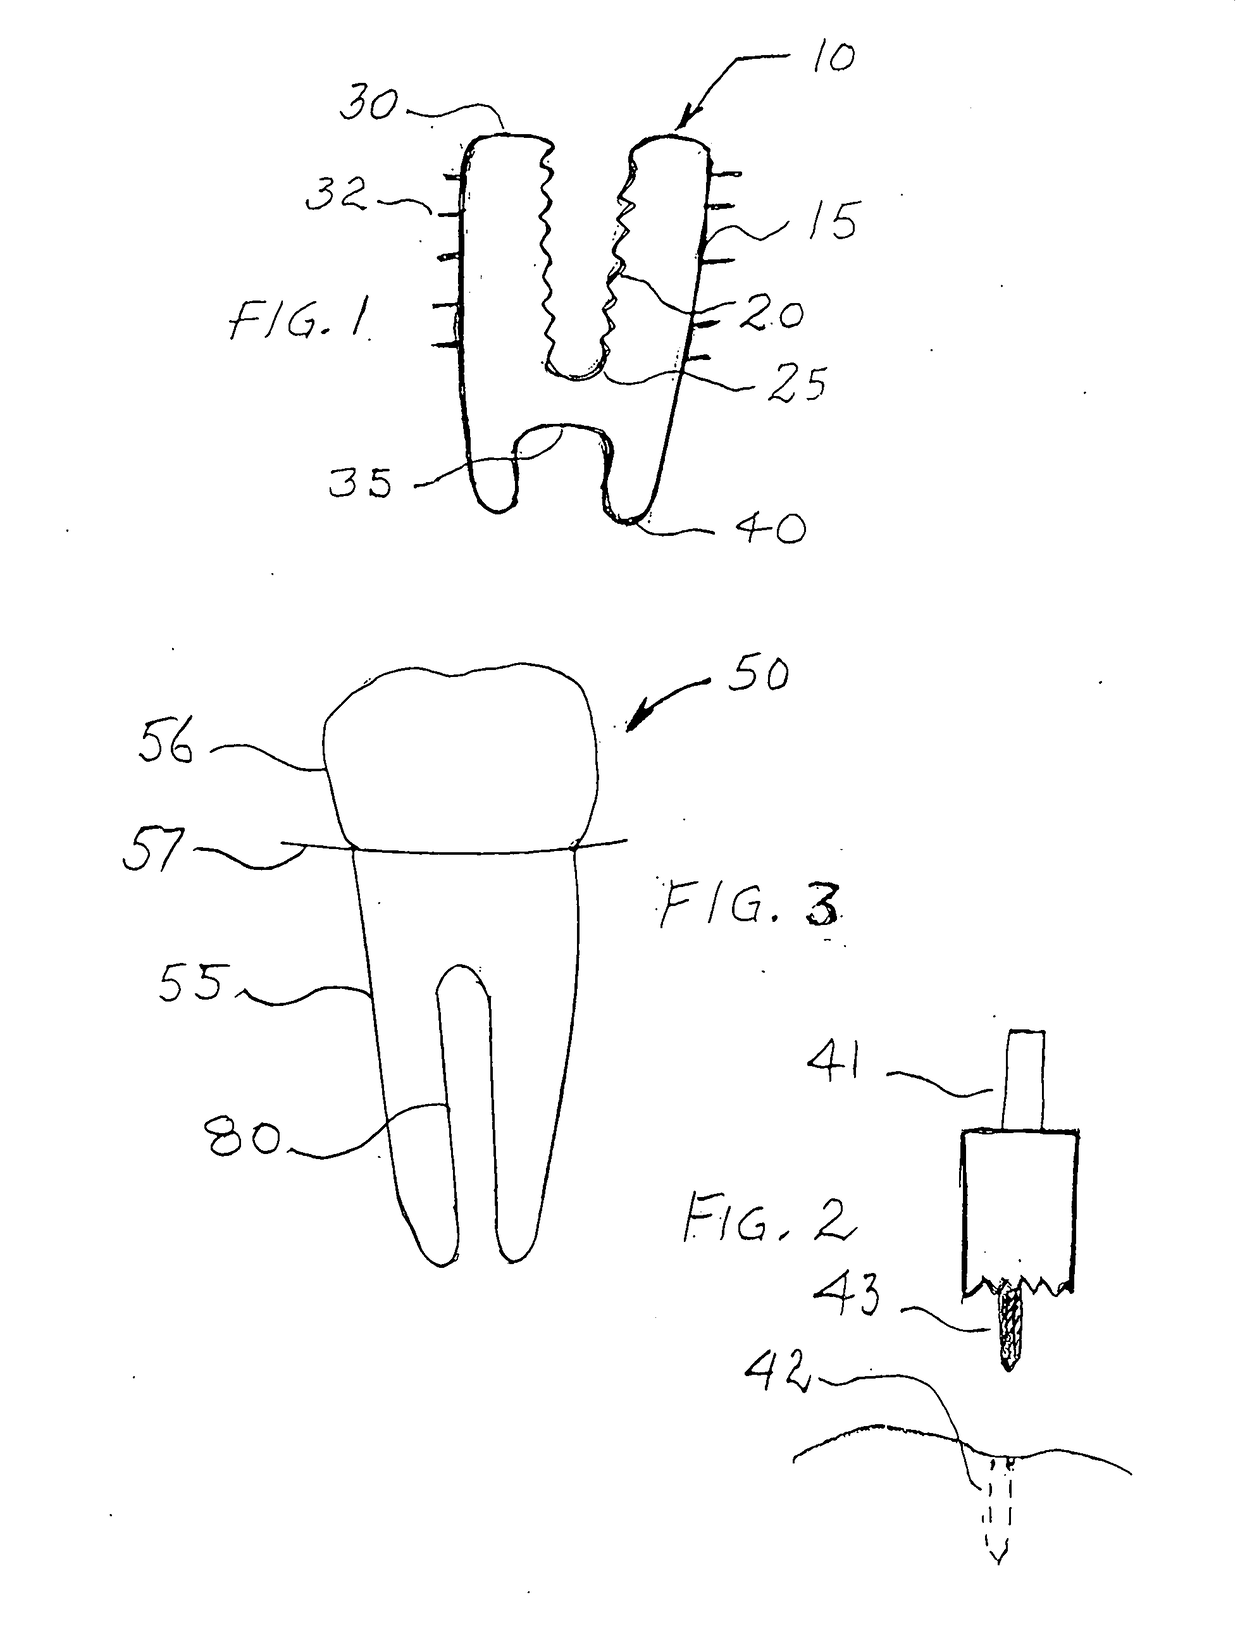 Anchoring system for prosthetics